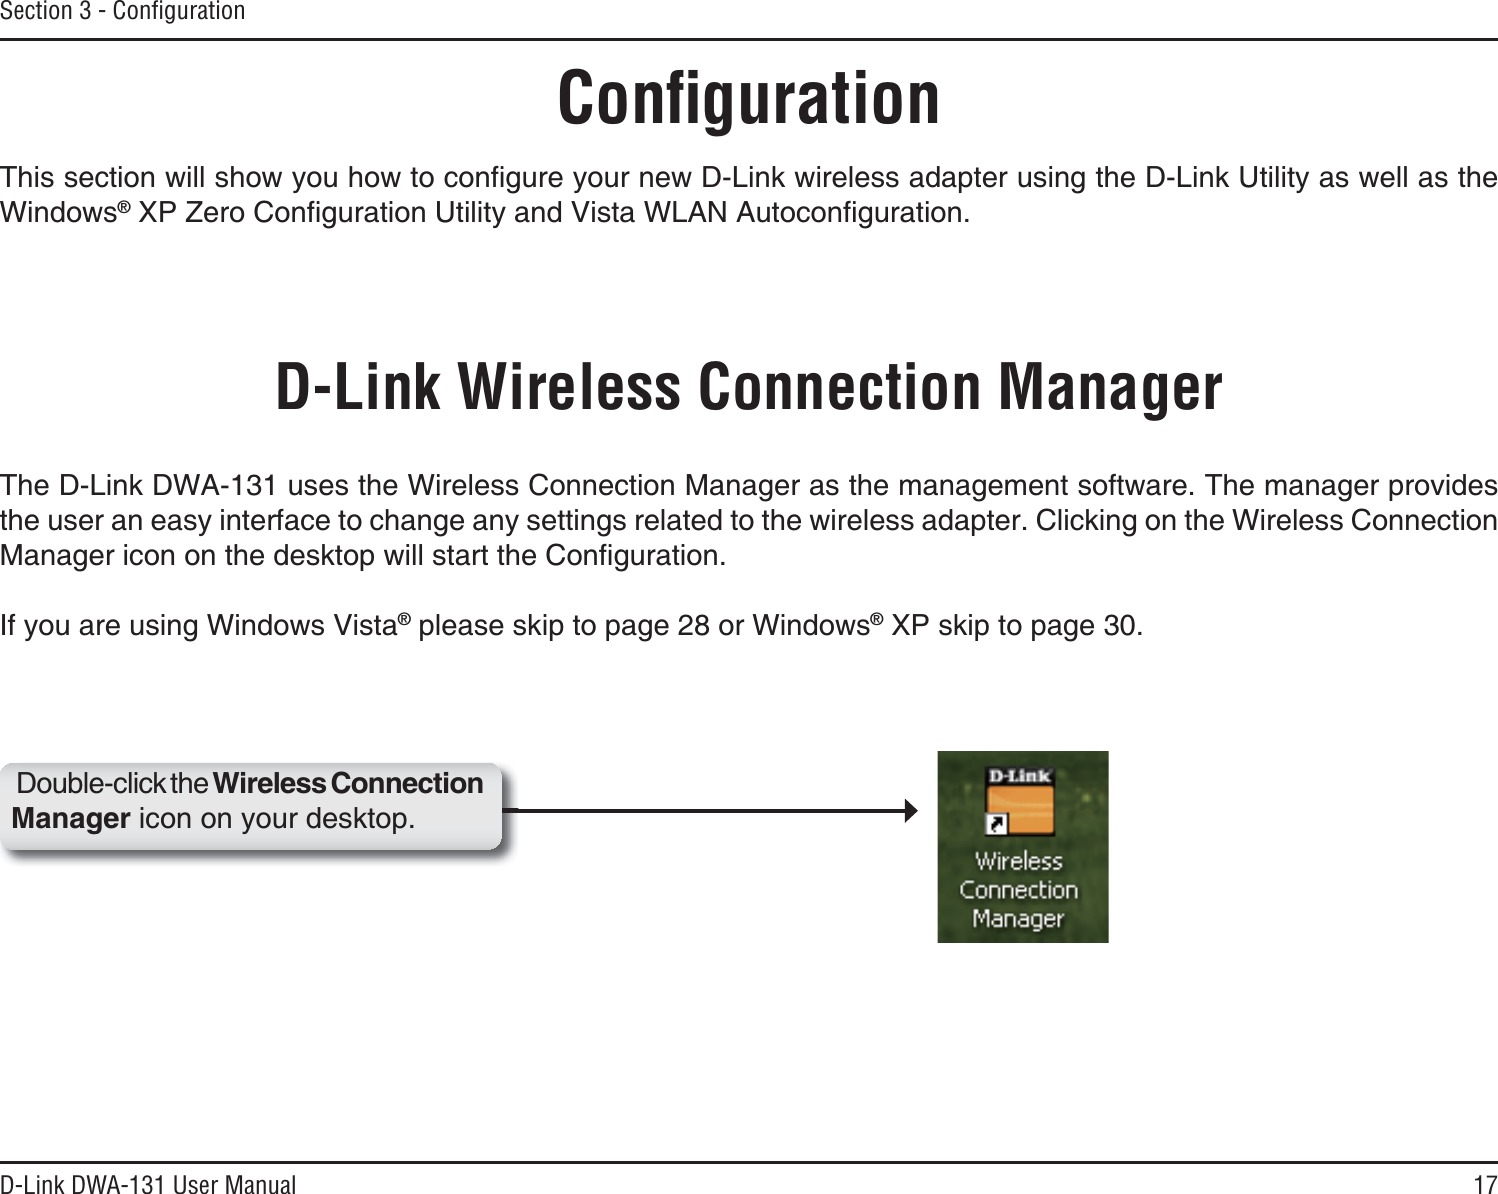 17D-Link DWA-131 User ManualSection 3 - ConﬁgurationConﬁguration6JKUUGEVKQPYKNNUJQY[QWJQYVQEQPſIWTG[QWTPGY&amp;.KPMYKTGNGUUCFCRVGTWUKPIVJG&amp;.KPM7VKNKV[CUYGNNCUVJGWindows®:2&lt;GTQ%QPſIWTCVKQP7VKNKV[CPF8KUVC9.#0#WVQEQPſIWTCVKQPD-Link Wireless Connection ManagerThe D-Link DWA-131 uses the Wireless Connection Manager as the management software. The manager provides the user an easy interface to change any settings related to the wireless adapter. Clicking on the Wireless Connection /CPCIGTKEQPQPVJGFGUMVQRYKNNUVCTVVJG%QPſIWTCVKQPIf you are using Windows Vista® please skip to page 28 or Windows® XP skip to page 30.Double-click the Wireless Connection /CPCIGTicon on your desktop.